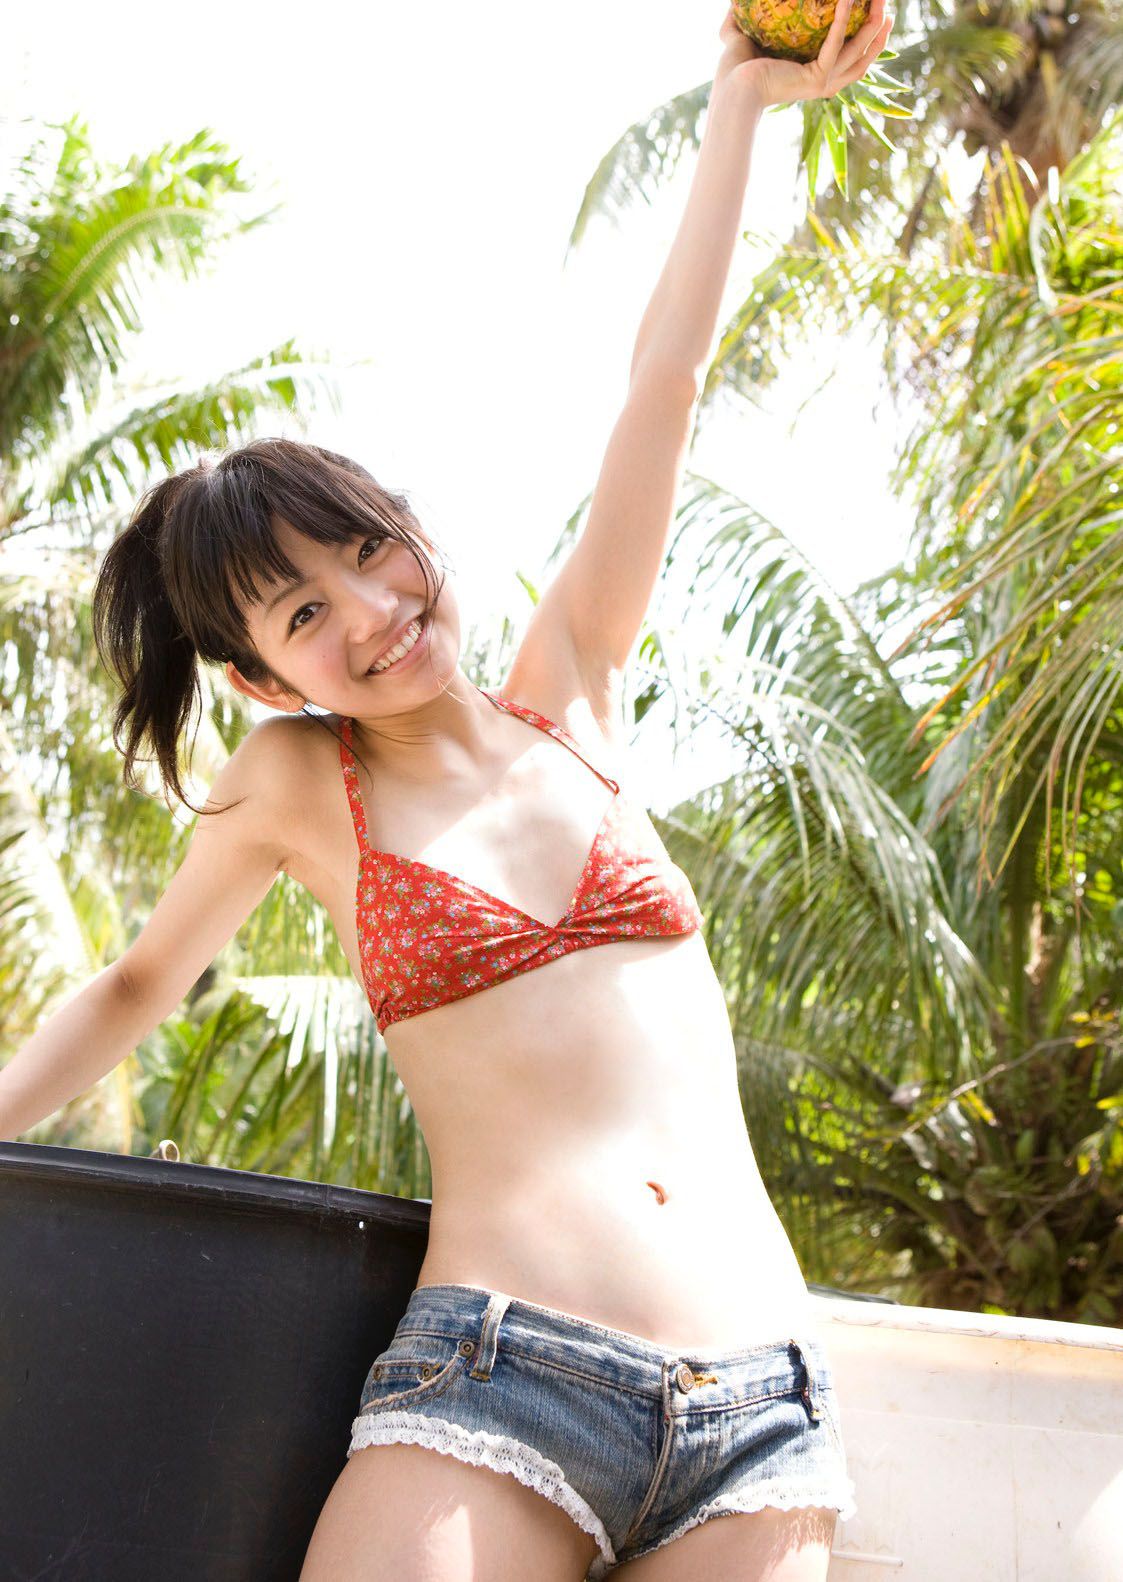 [Image] former idling Morita ryoka's body too erotic double awesome. [3] 18